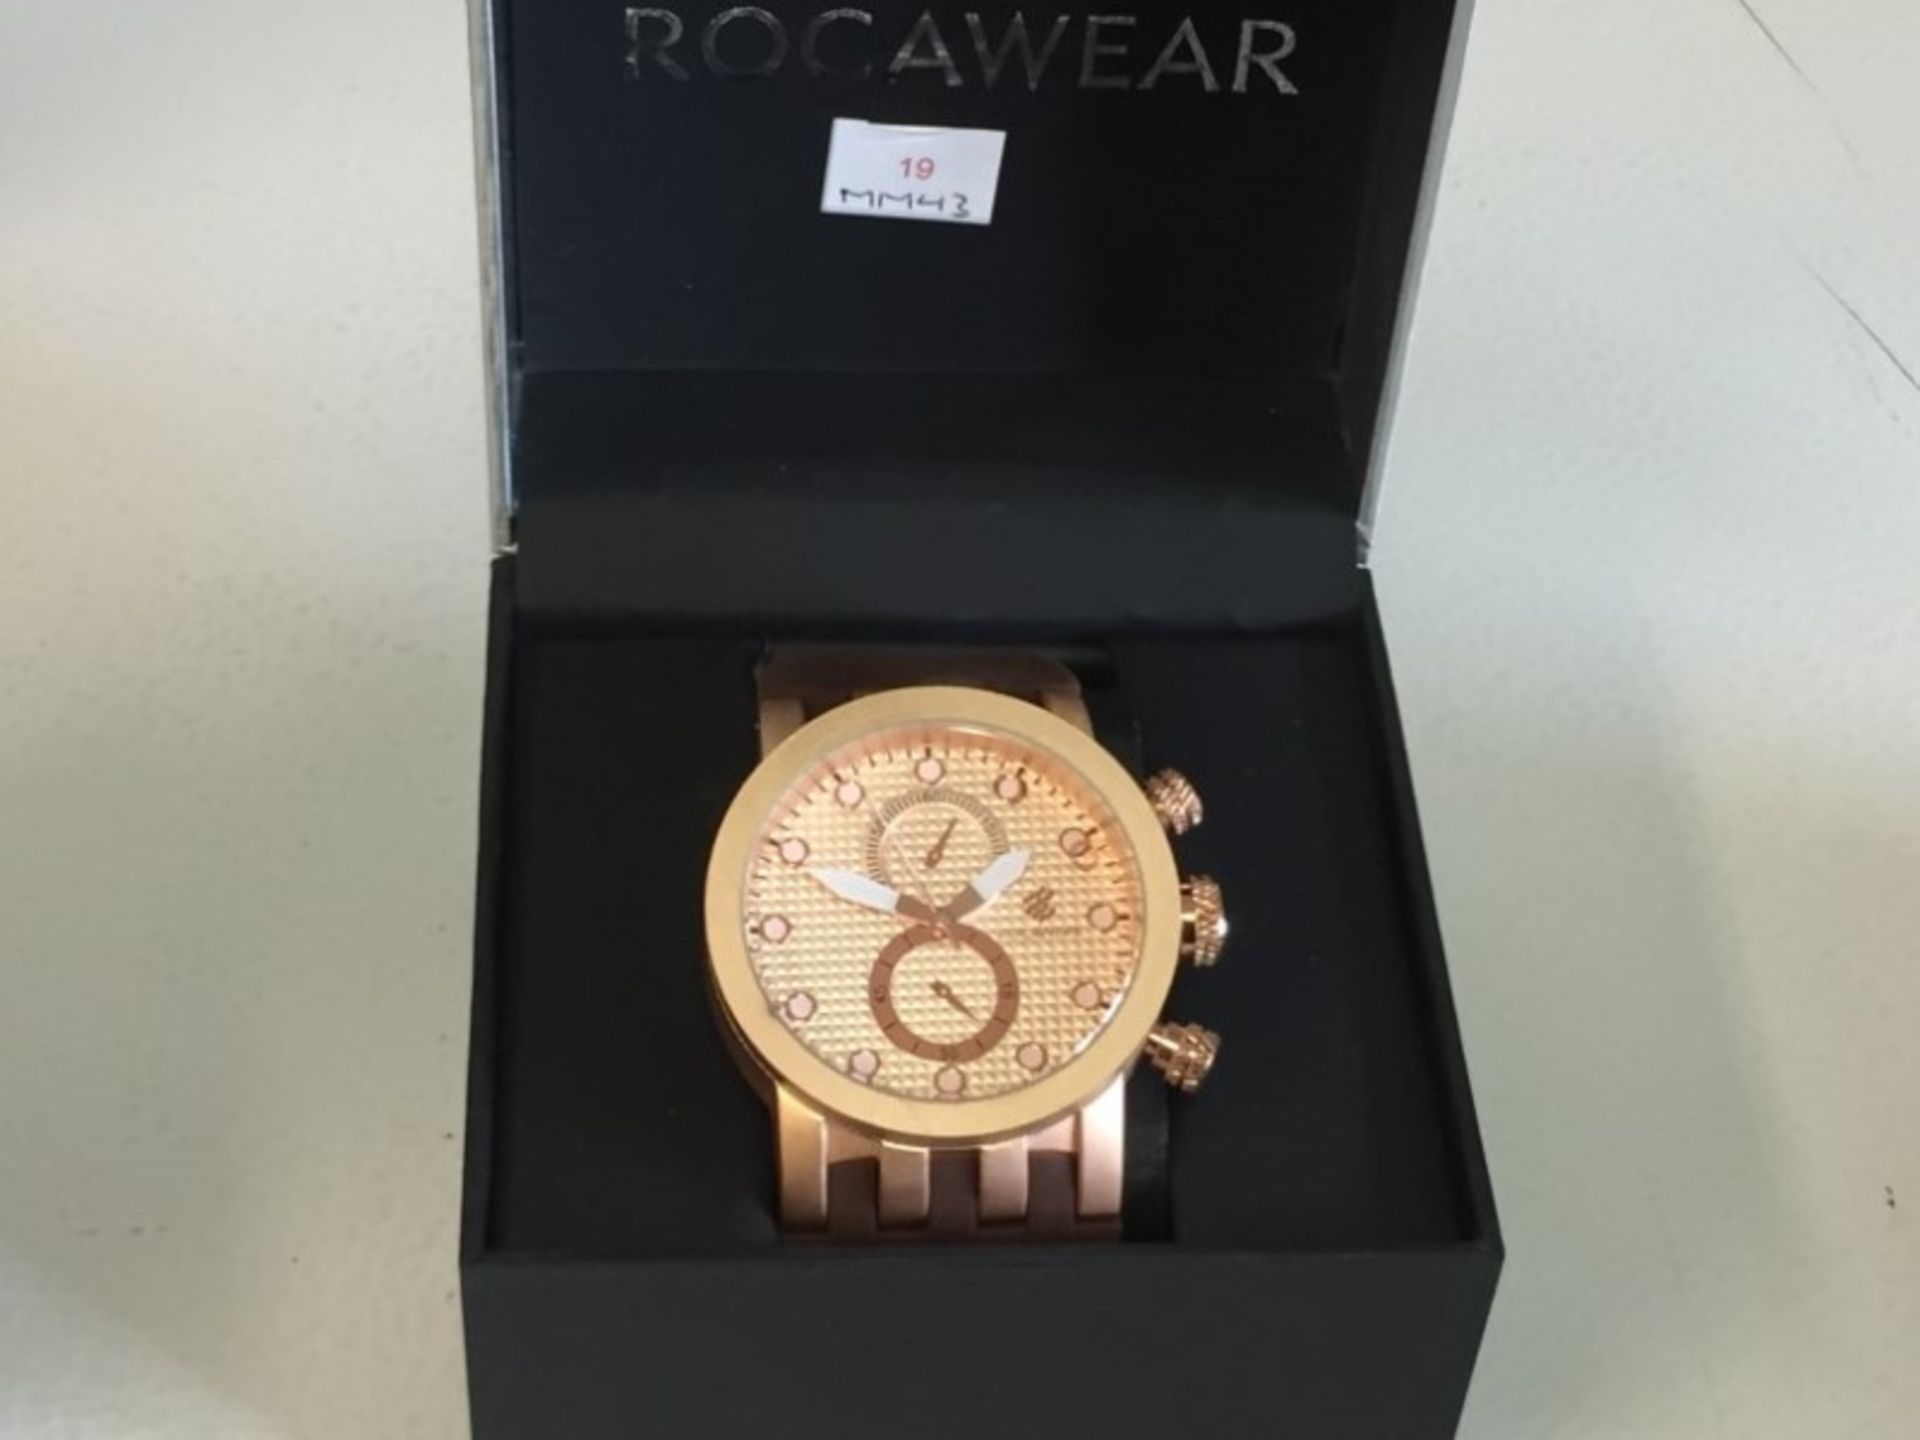 Roca Wear large faced watch